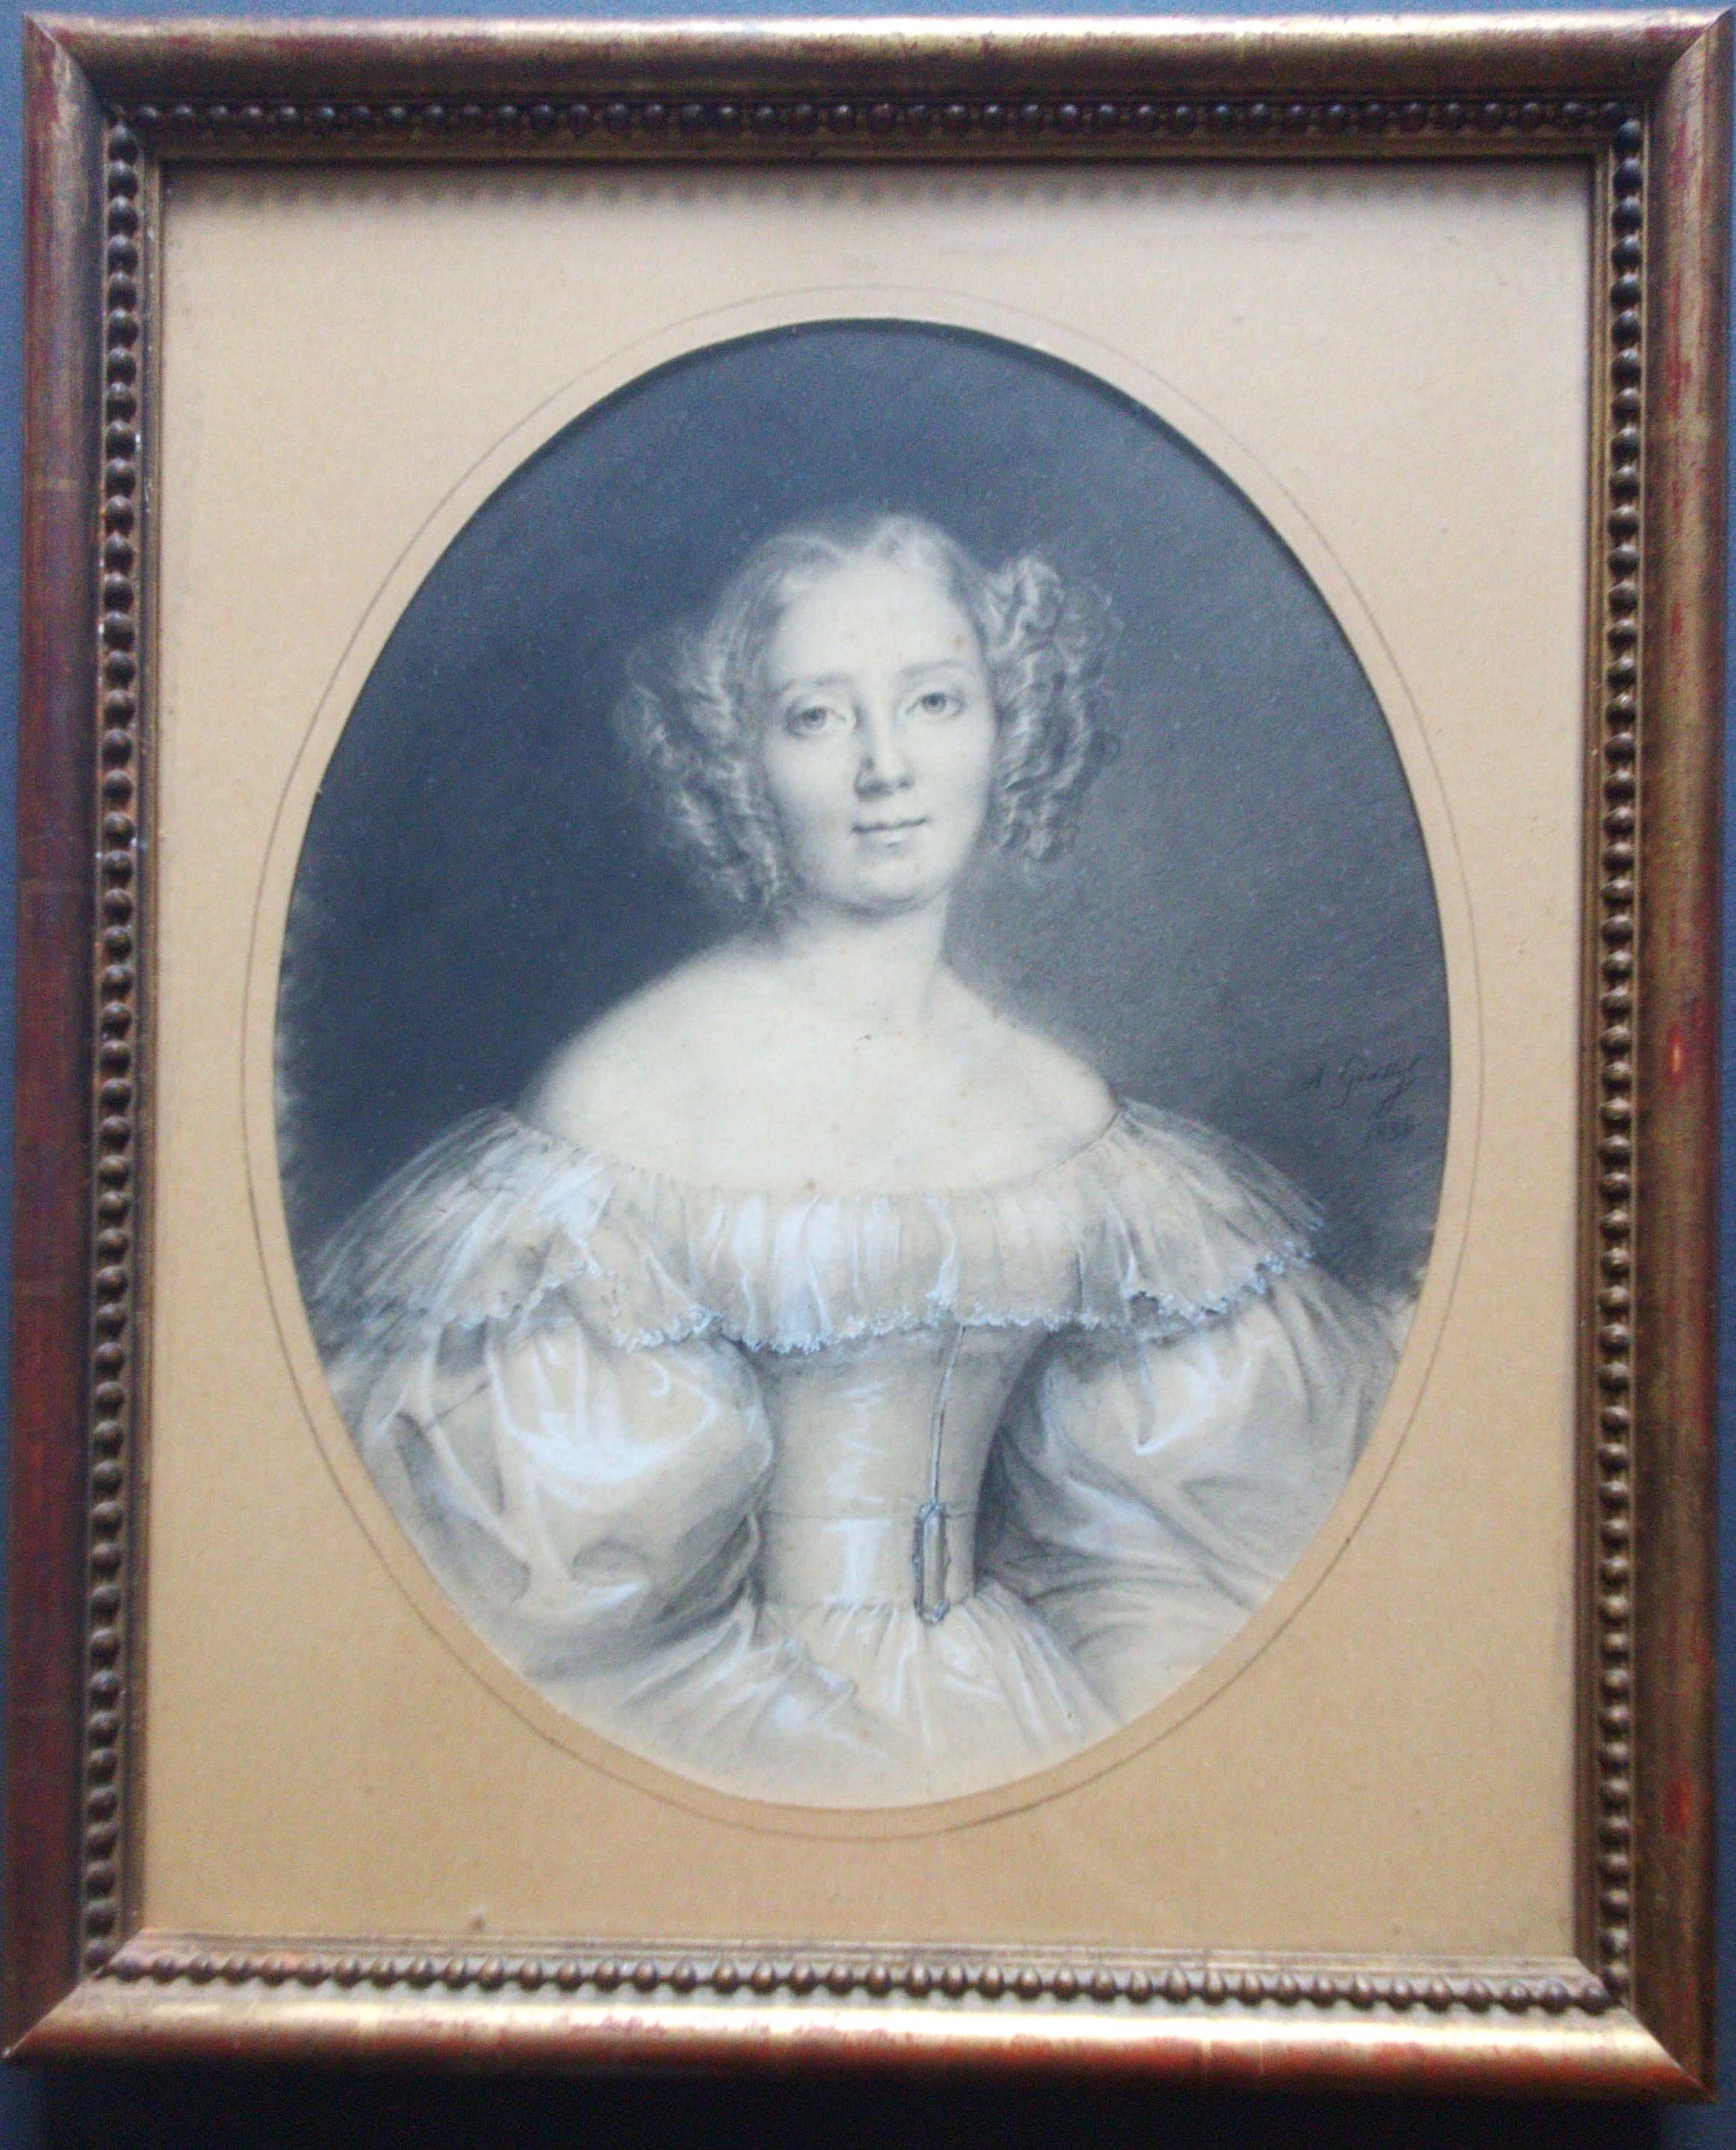 1830s portraits